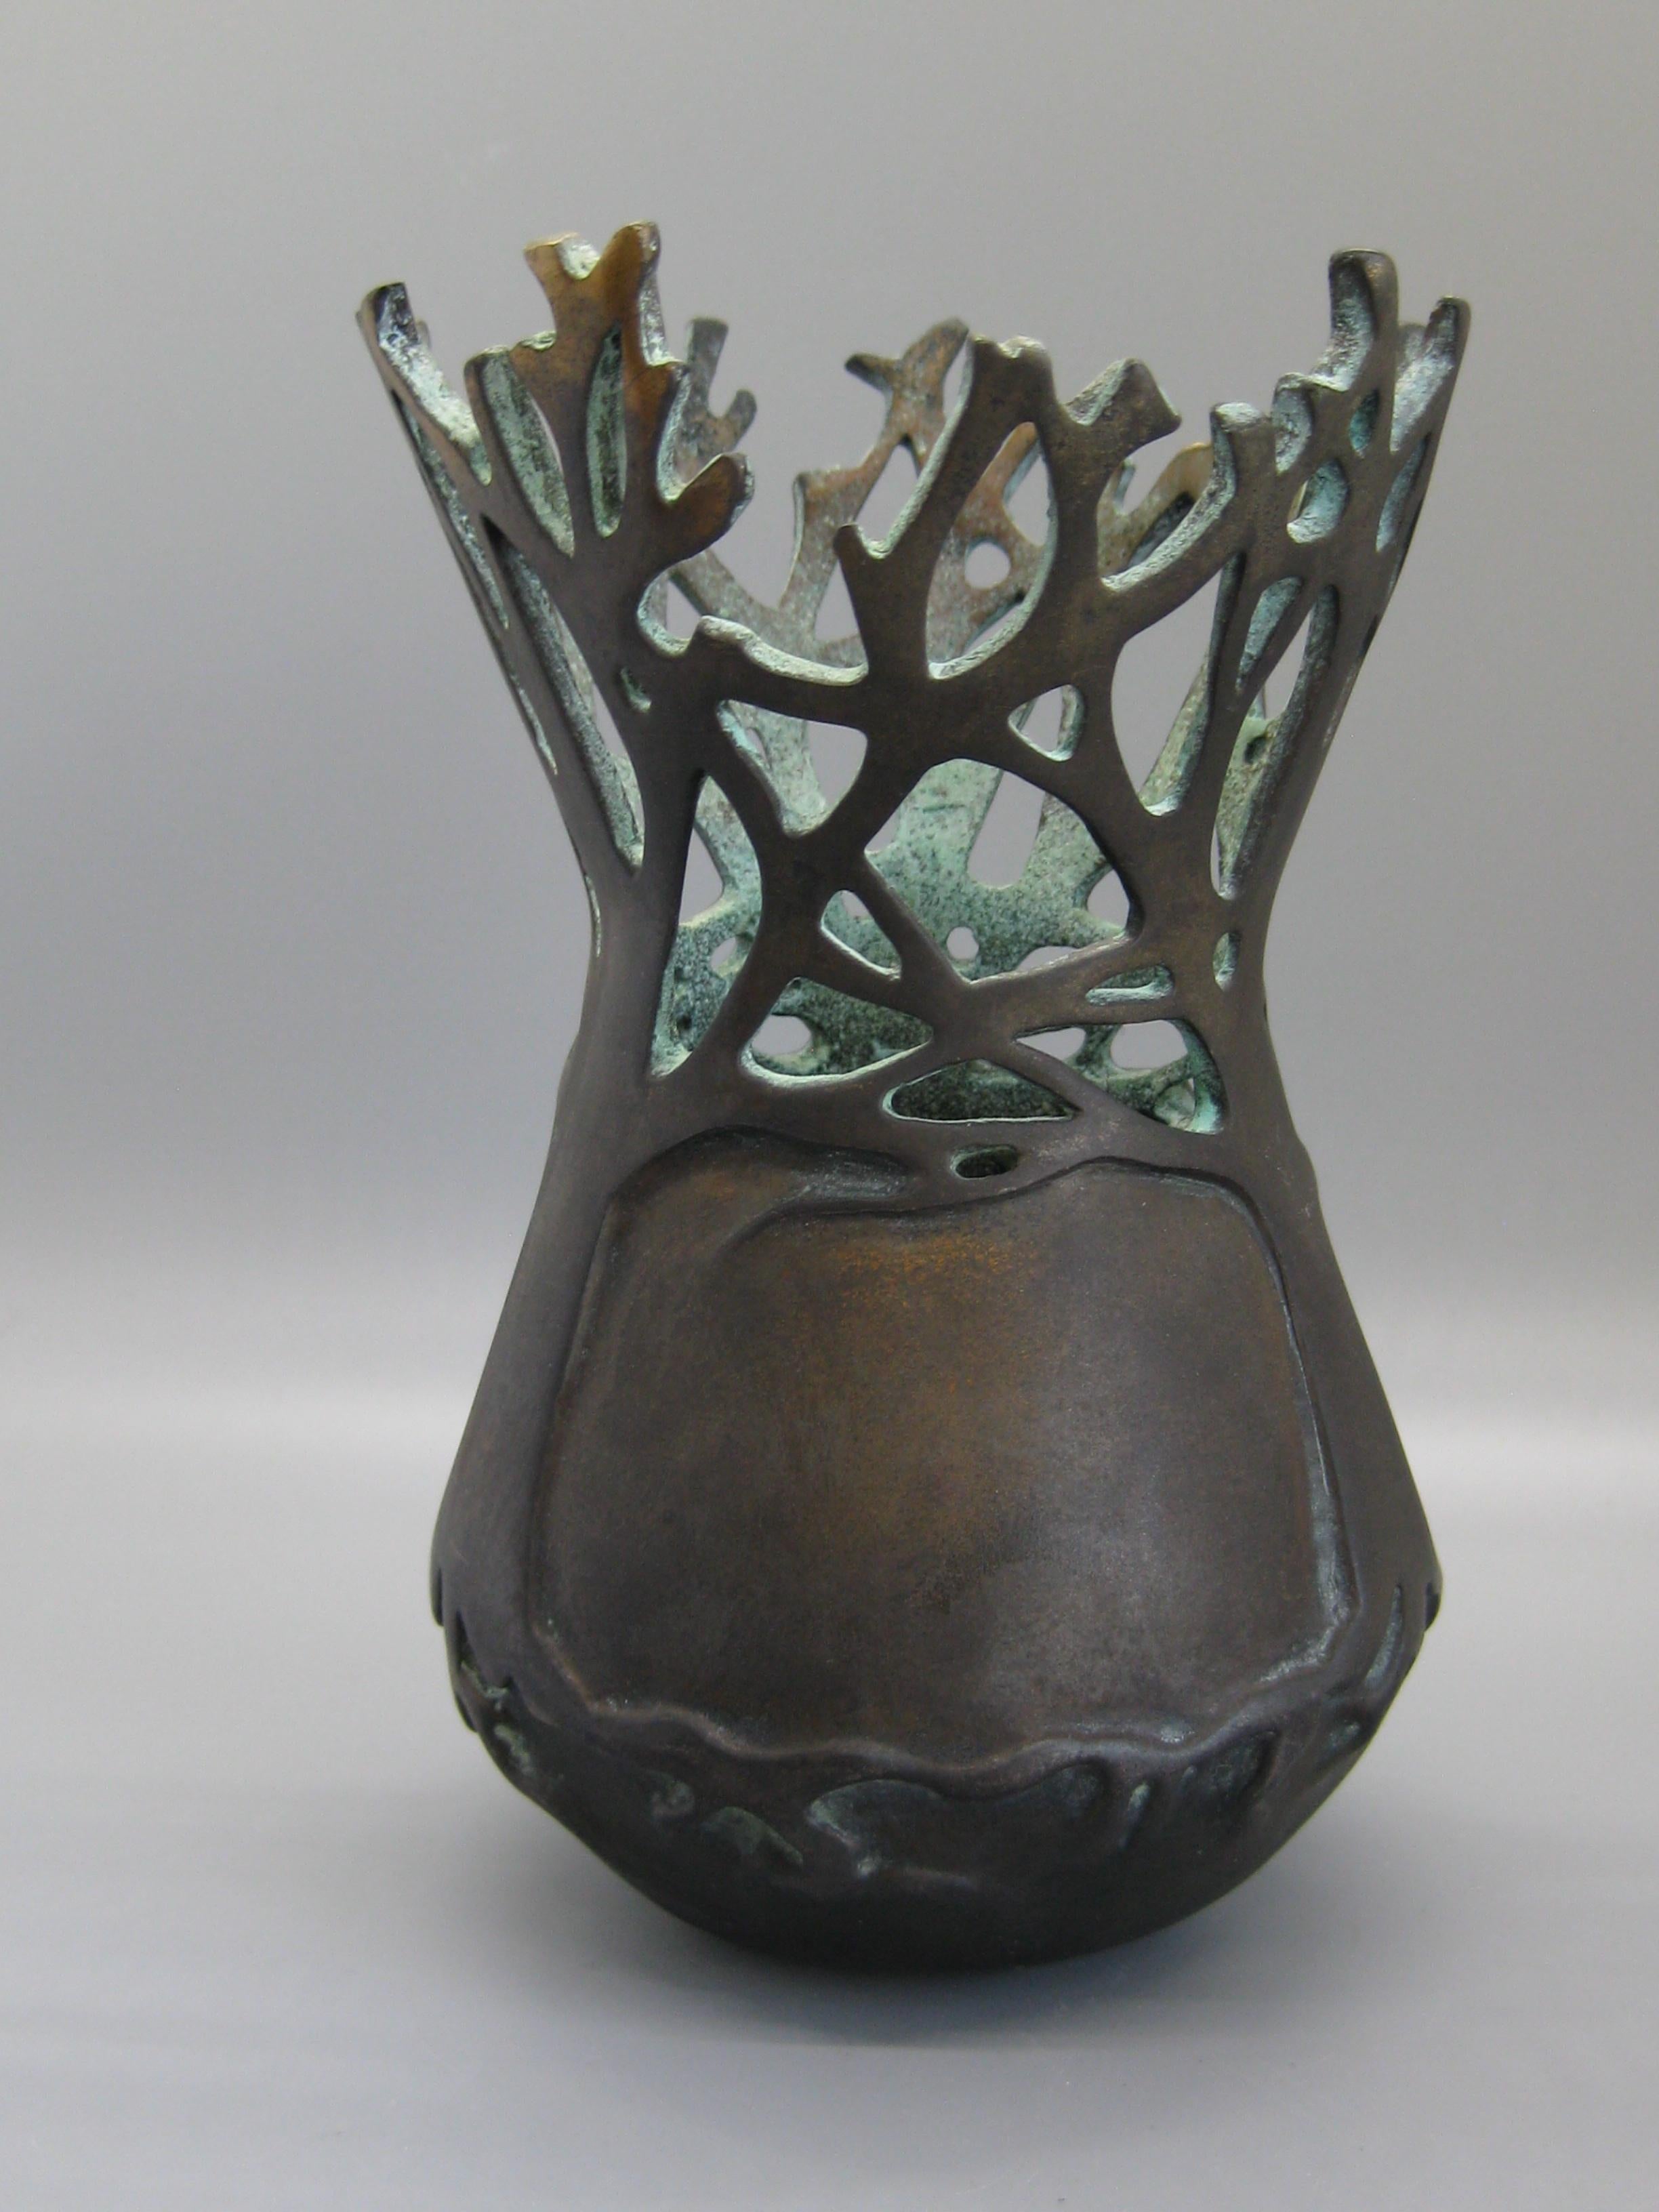 2001 Carol Alleman Organic Midcentury Bronze Vase Vessel Sculpture Limited 75 For Sale 4